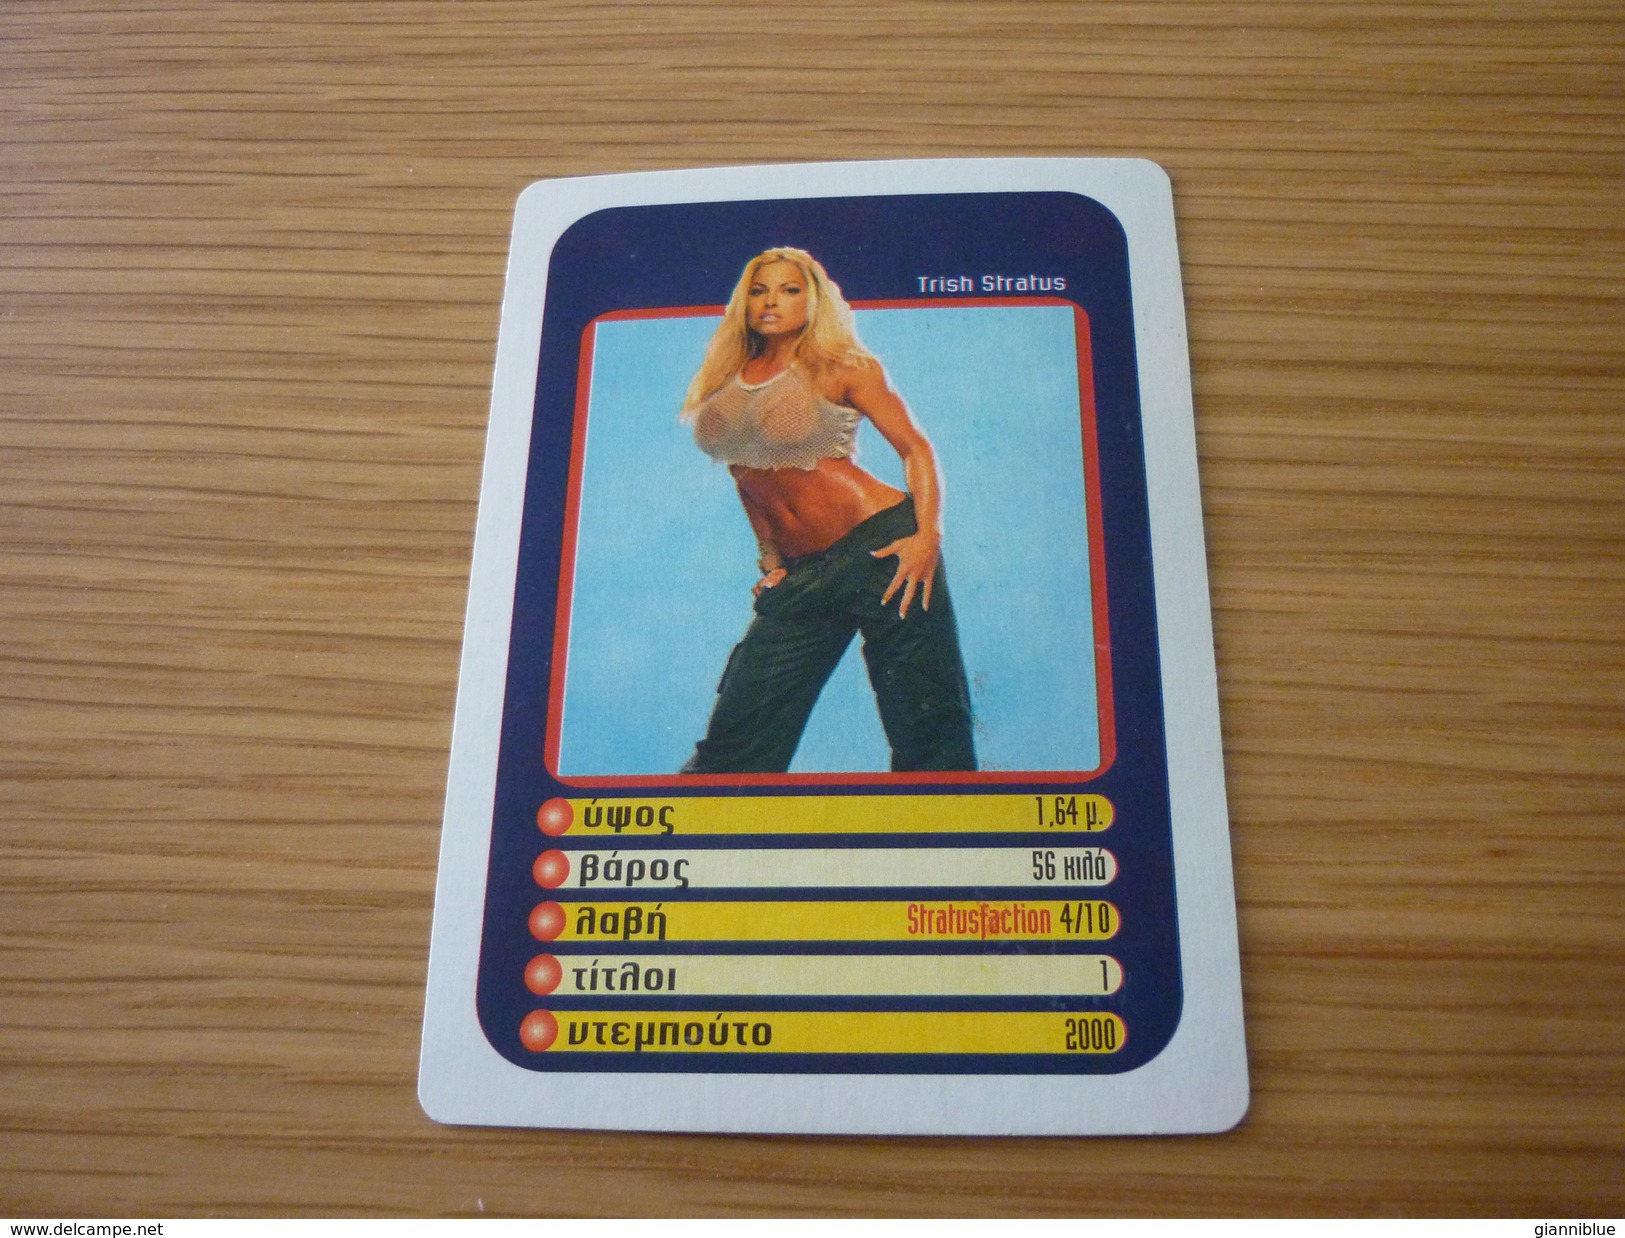 Trish Stratus WWE WWF Smackdown Smack Down Wrestling Stars Greece Greek Trading Card - Trading Cards